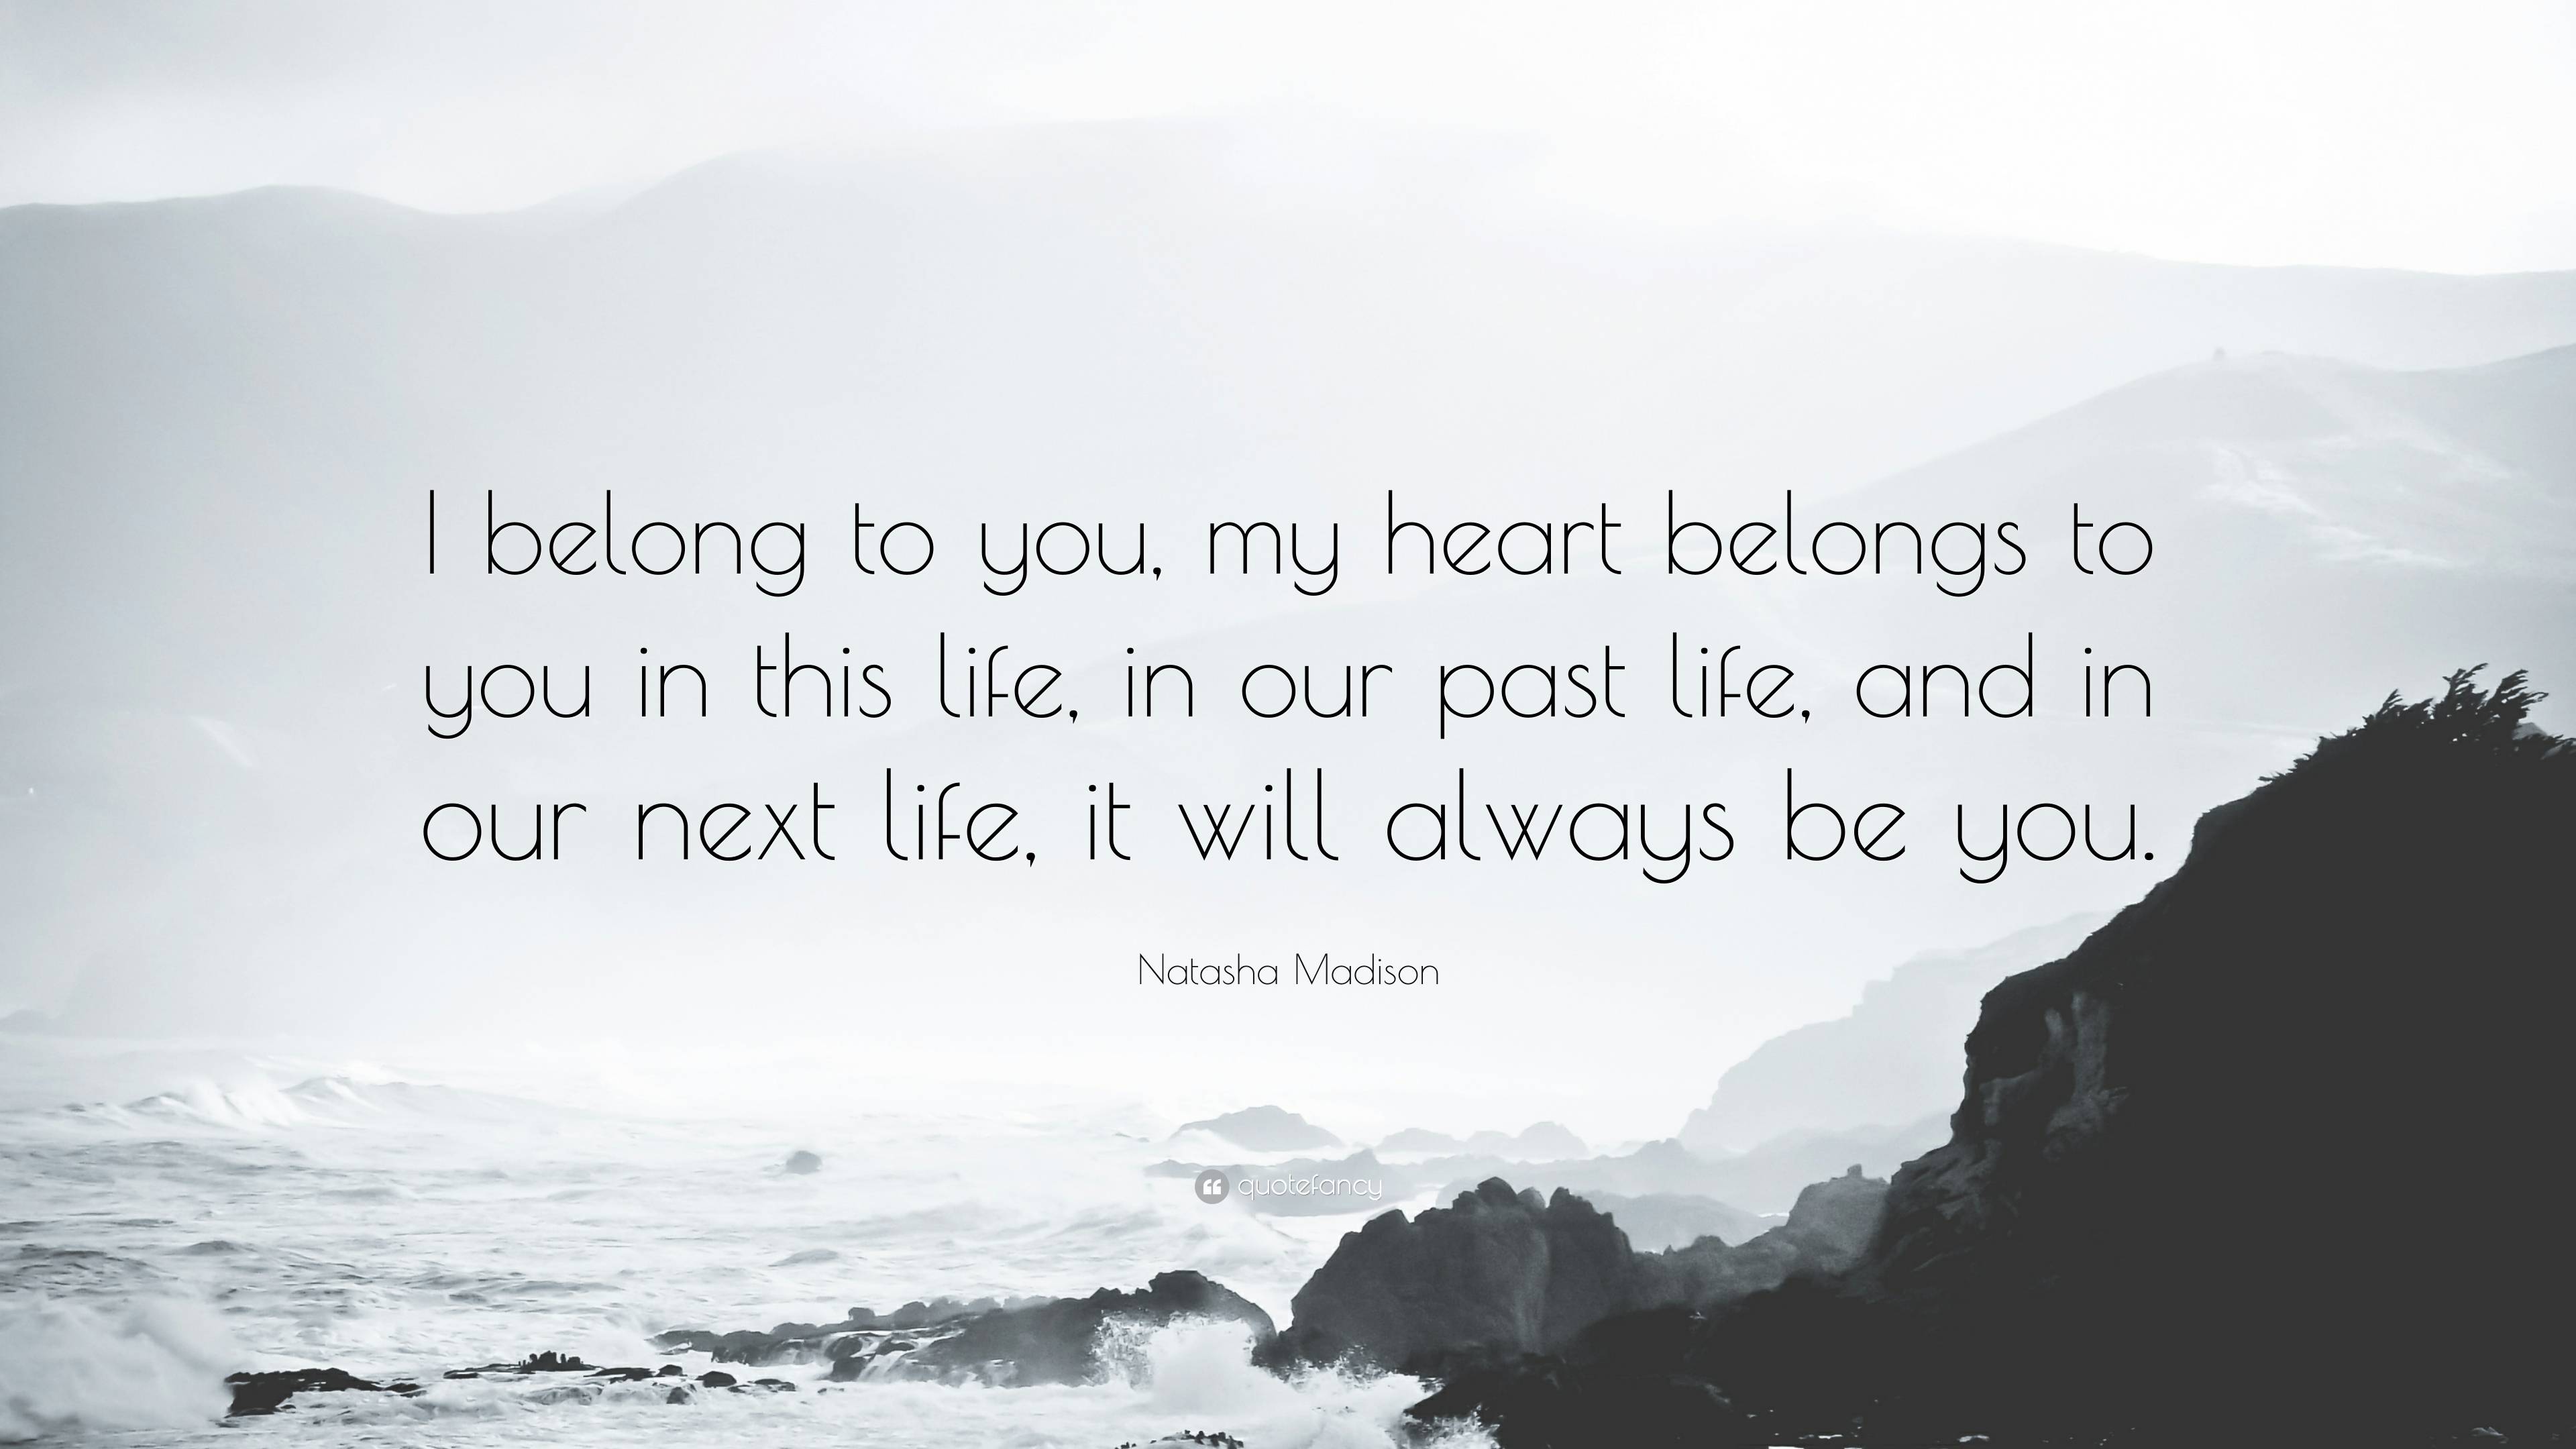 Natasha Madison Quote: “I belong to you, my heart belongs to you